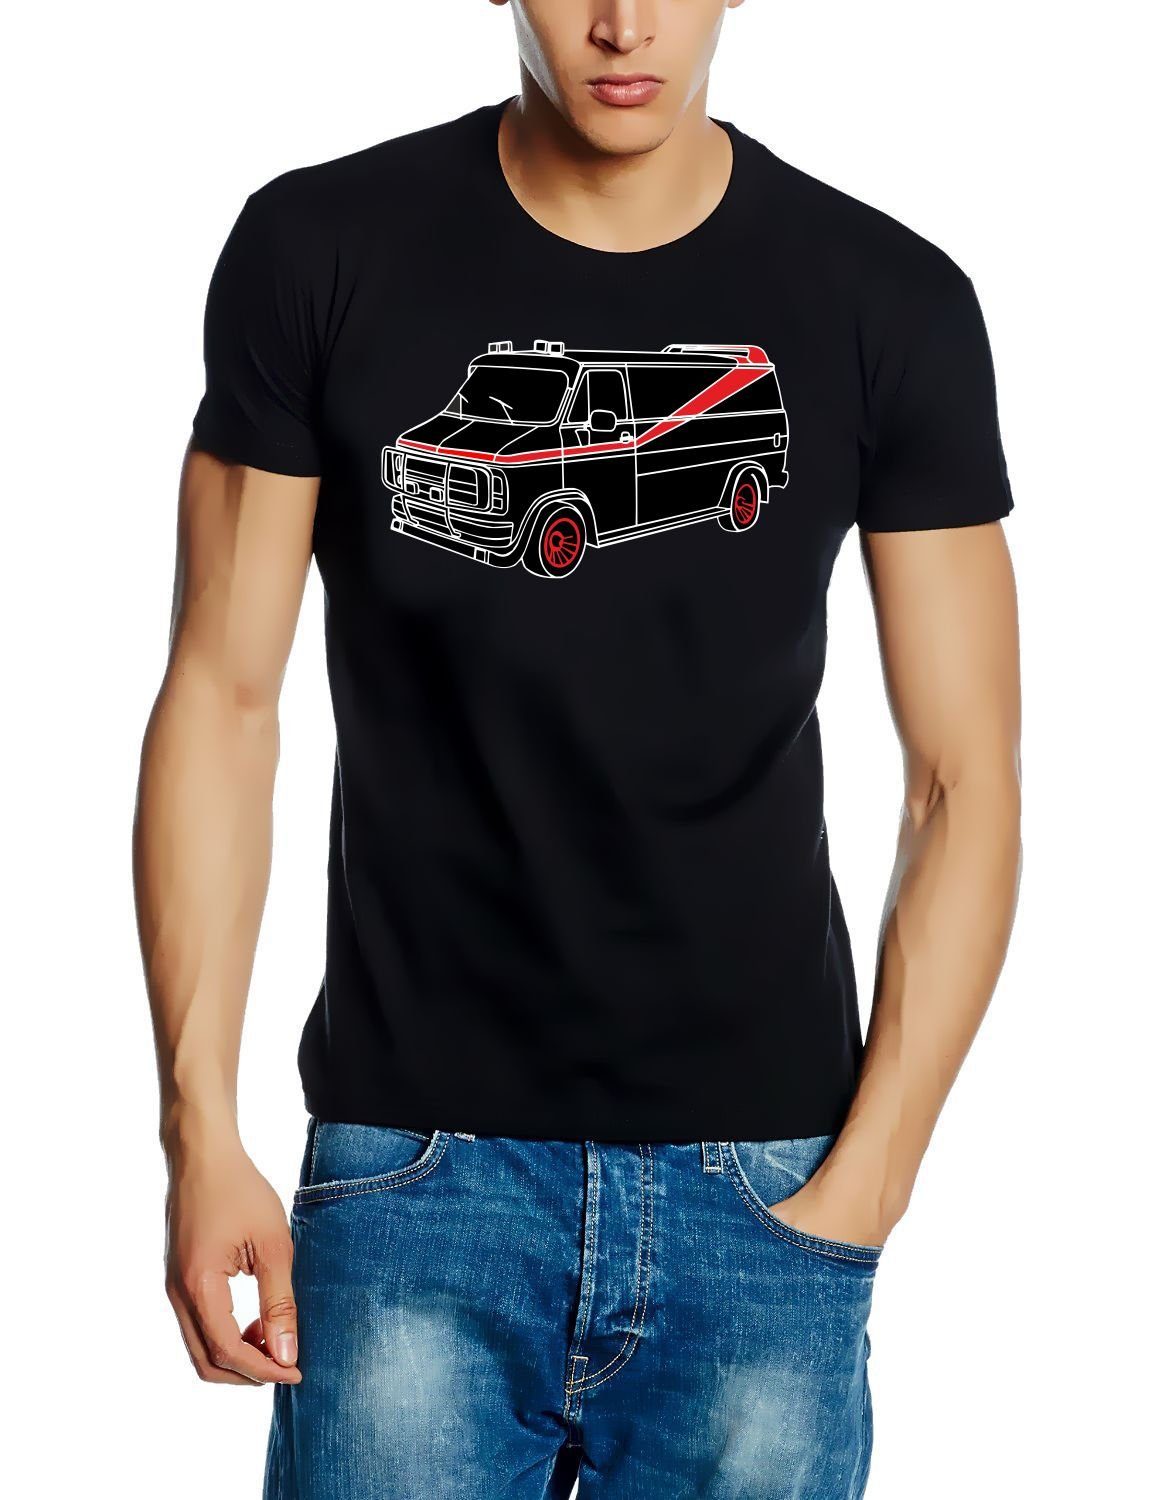 L Van M coole-fun-t-shirts S Schwarz T-Shirt 3XL XL XXL A-TEAM Bus Print-Shirt